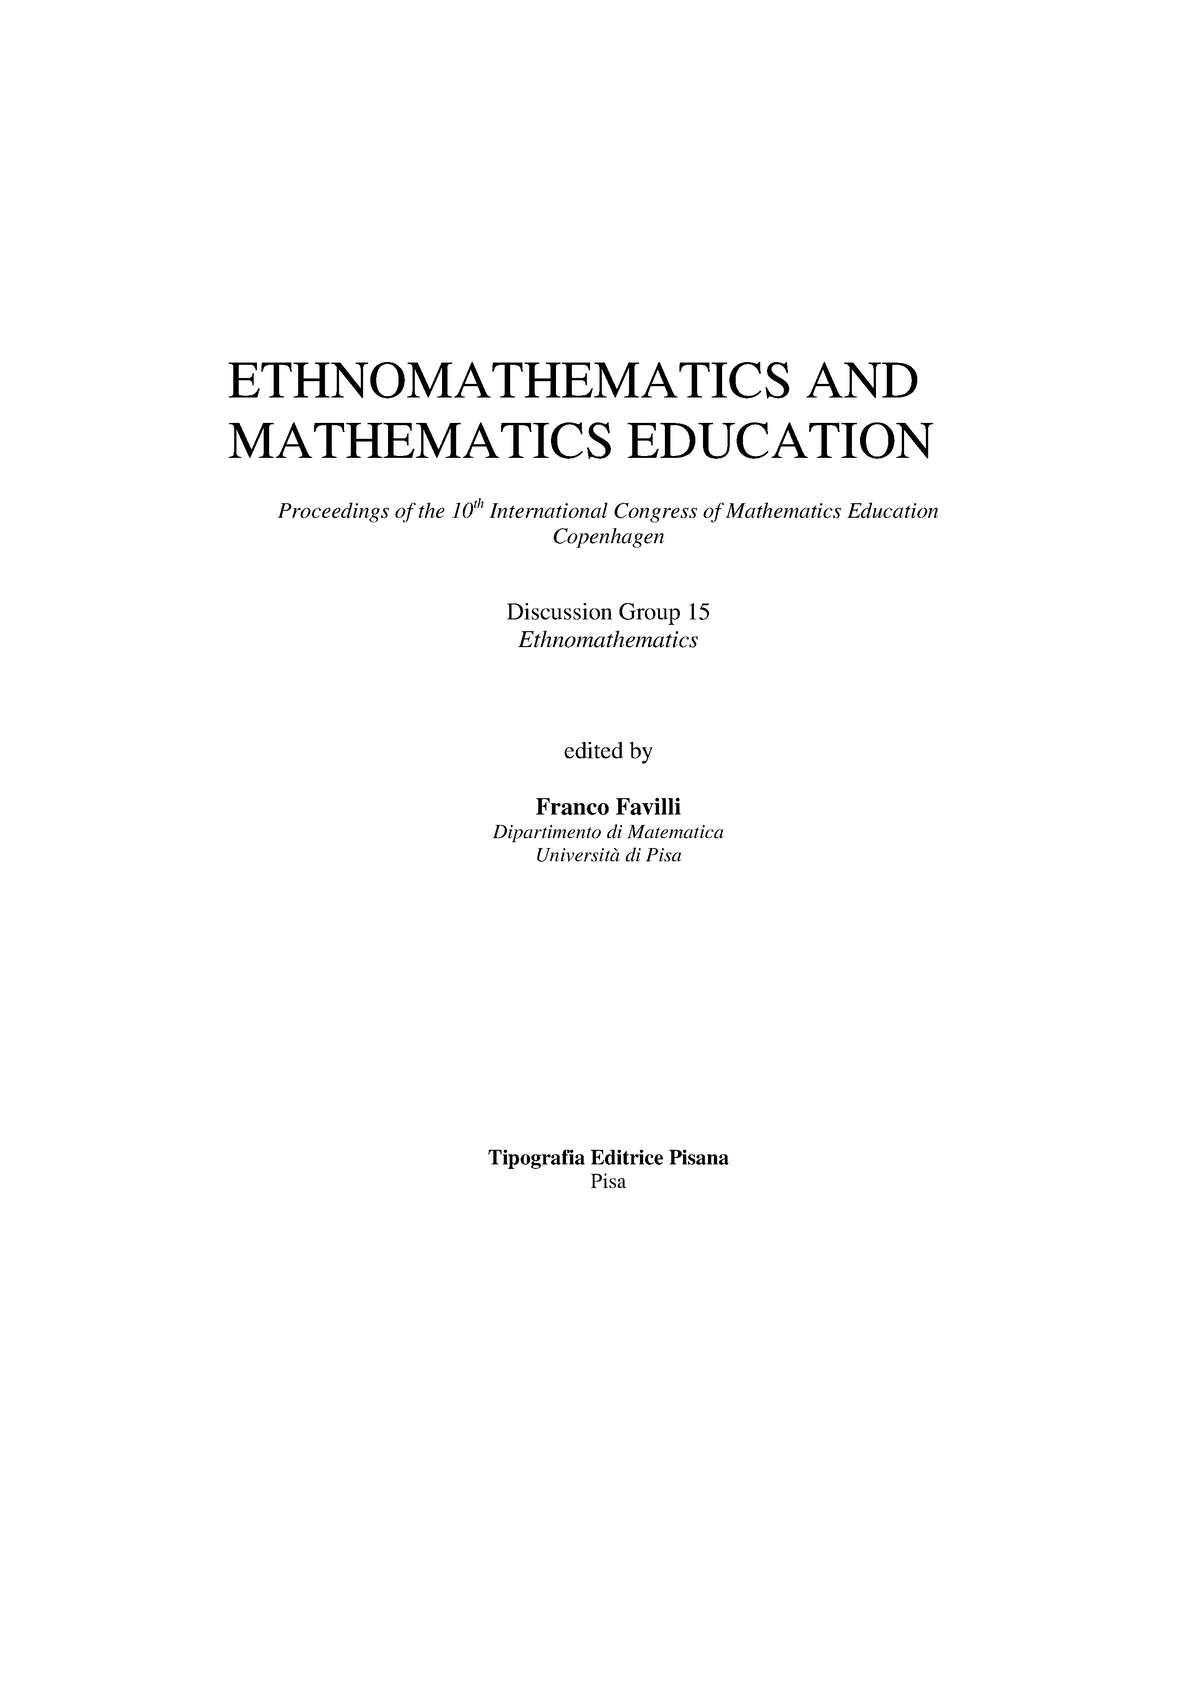 thesis on ethnomathematics phd